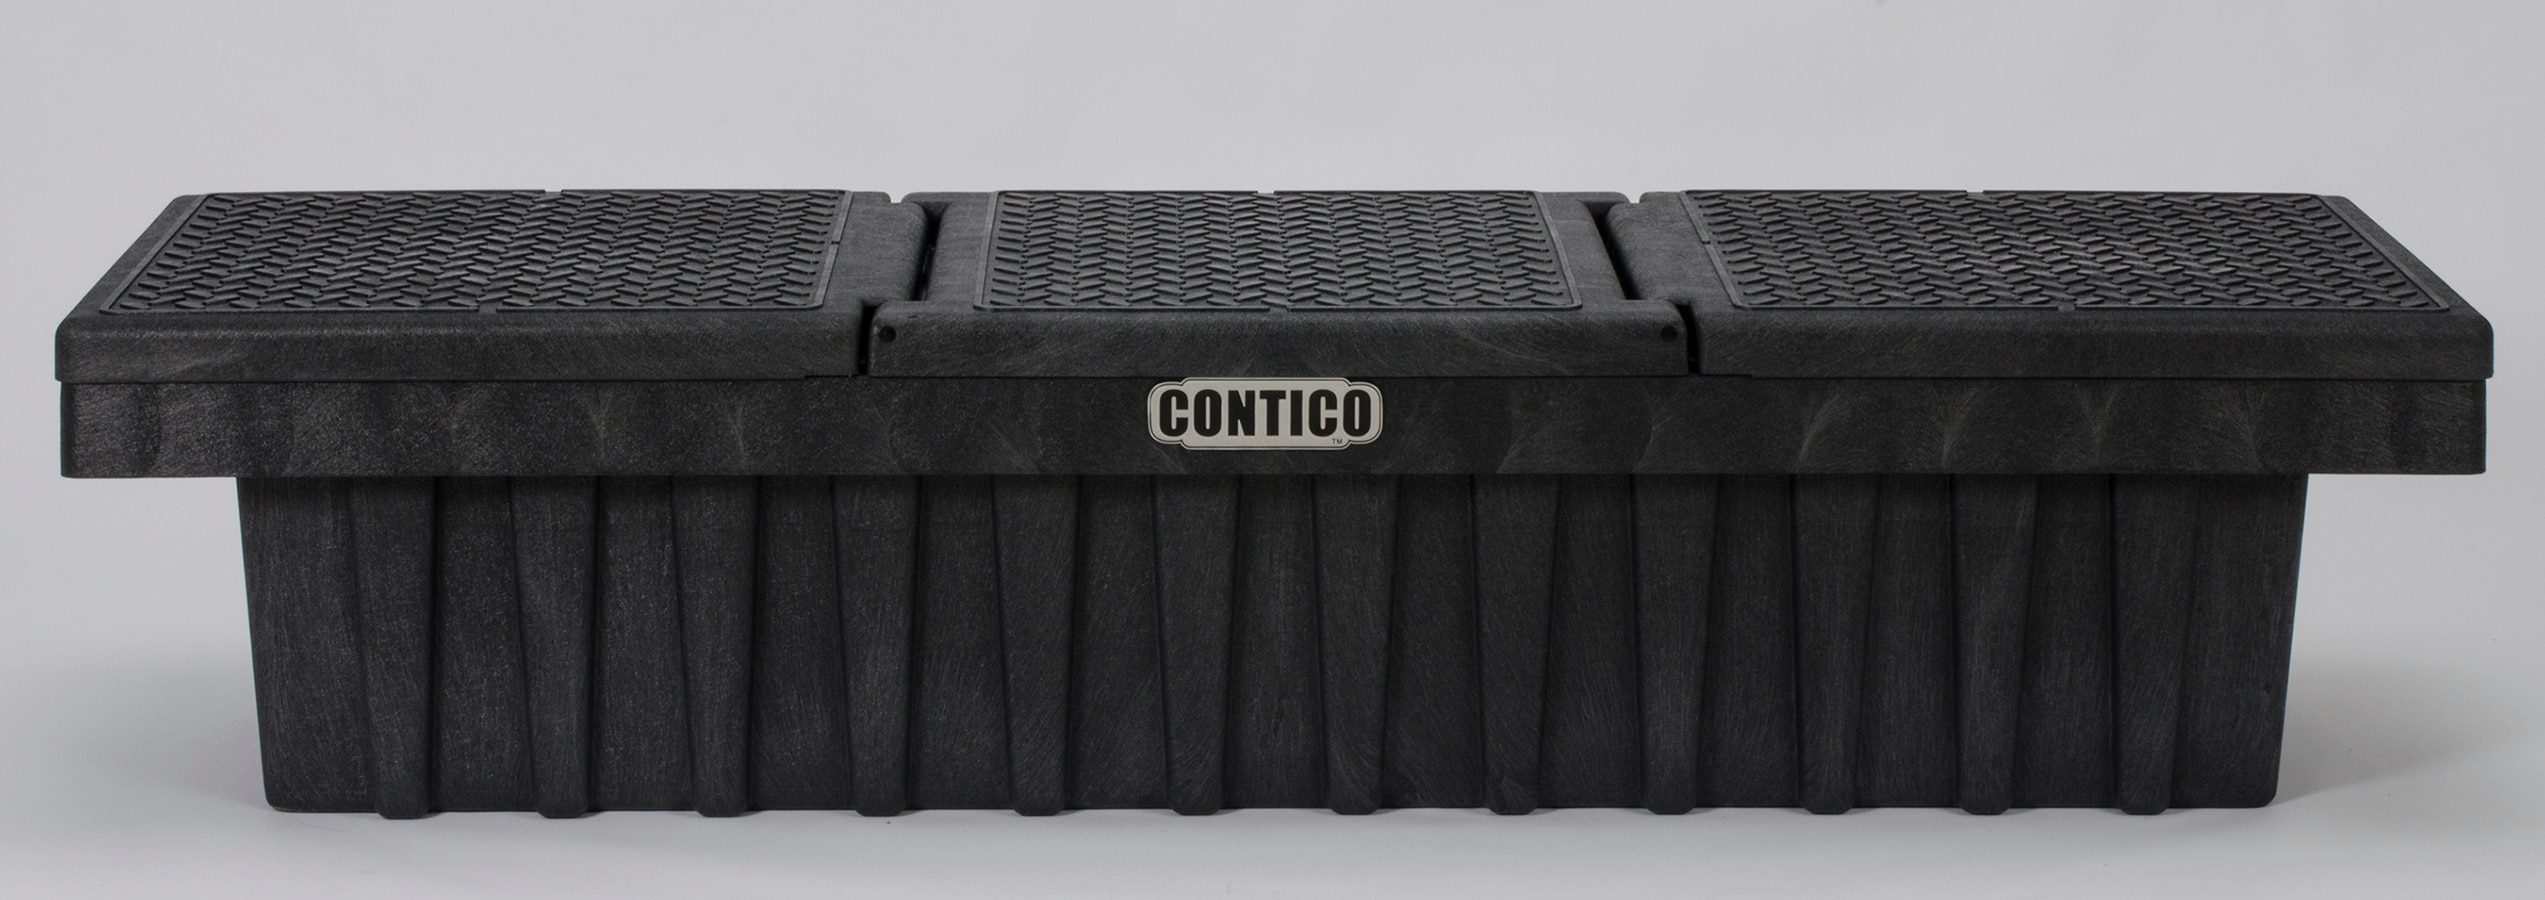 CONTICO 71.25-in x 21.5-in x 16.25-in Black Plastic Truck Tool Box at